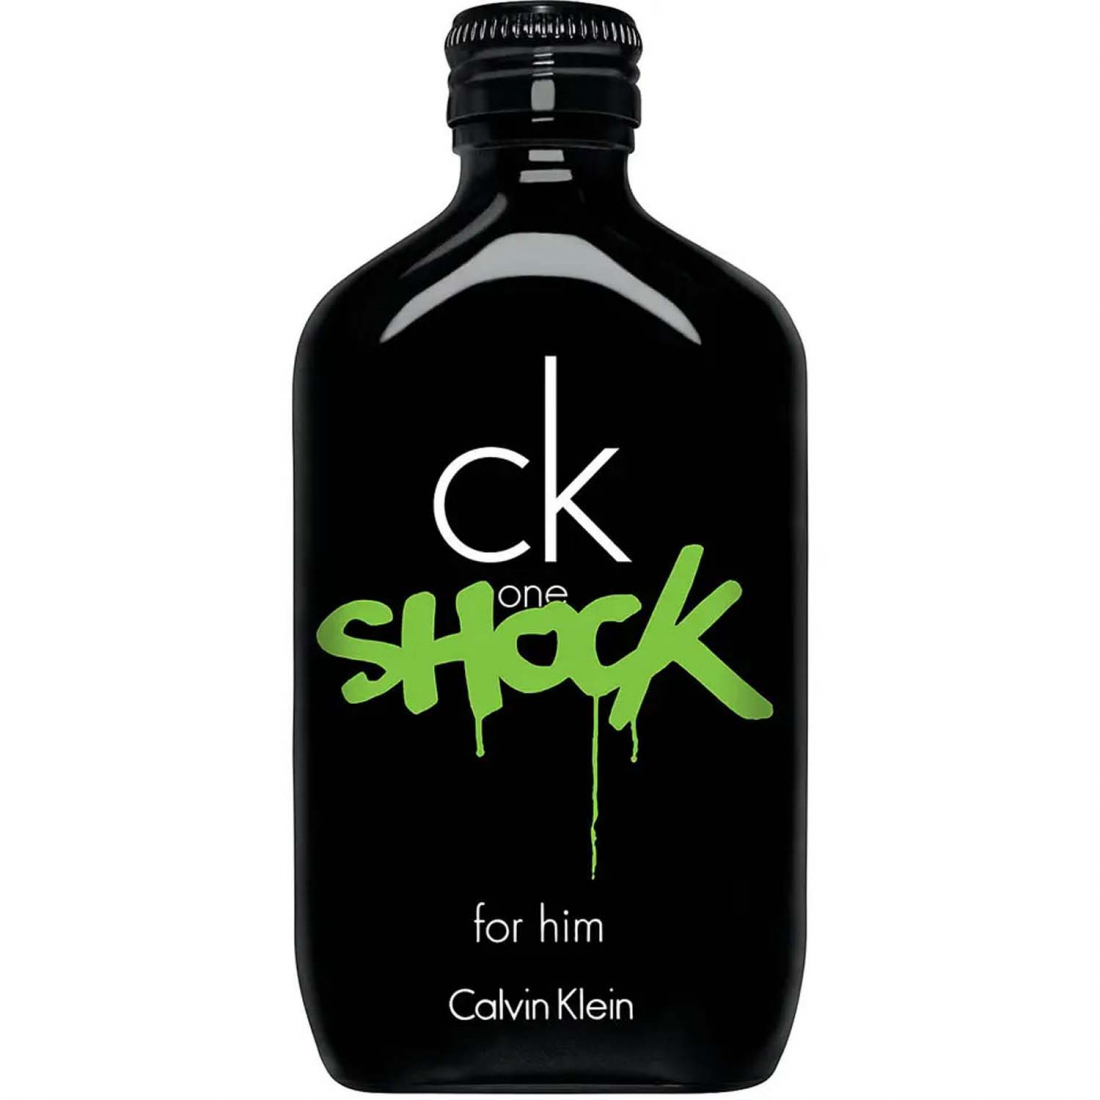 Eau de toilette 'CK One Shock' - 100 ml